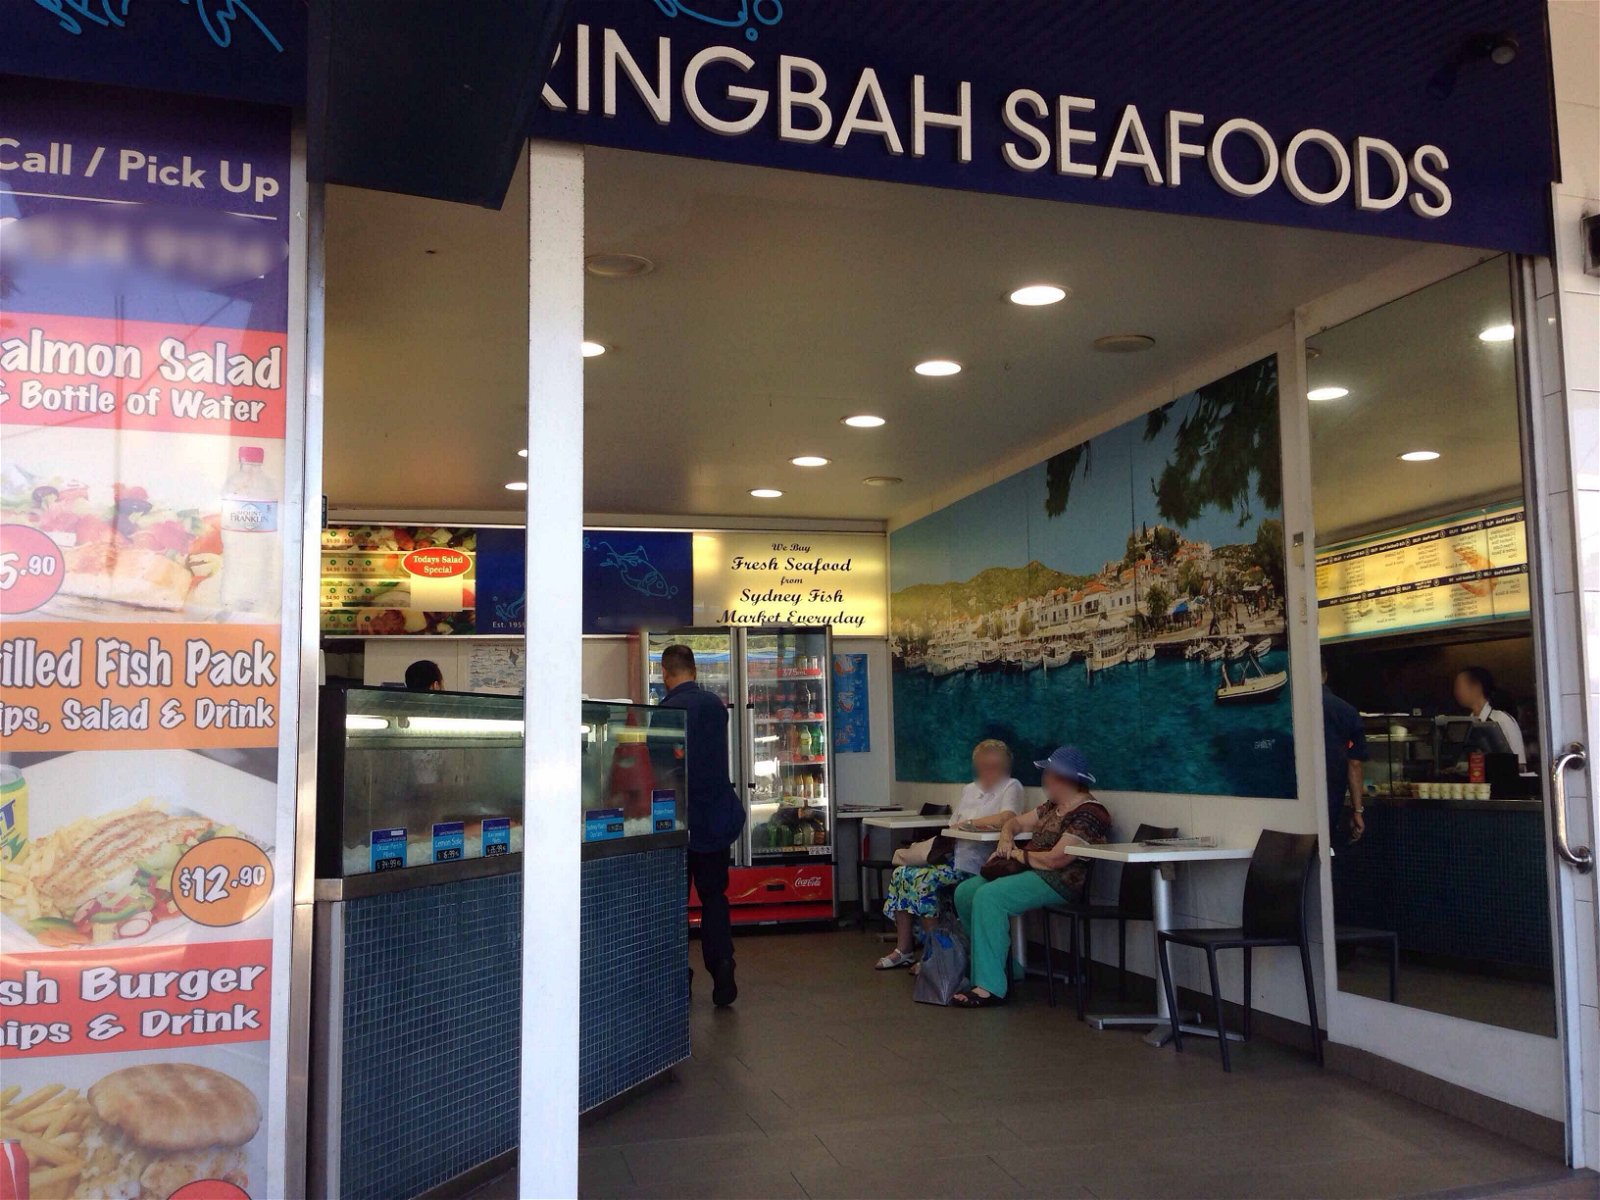 Caringbah Sea Foods